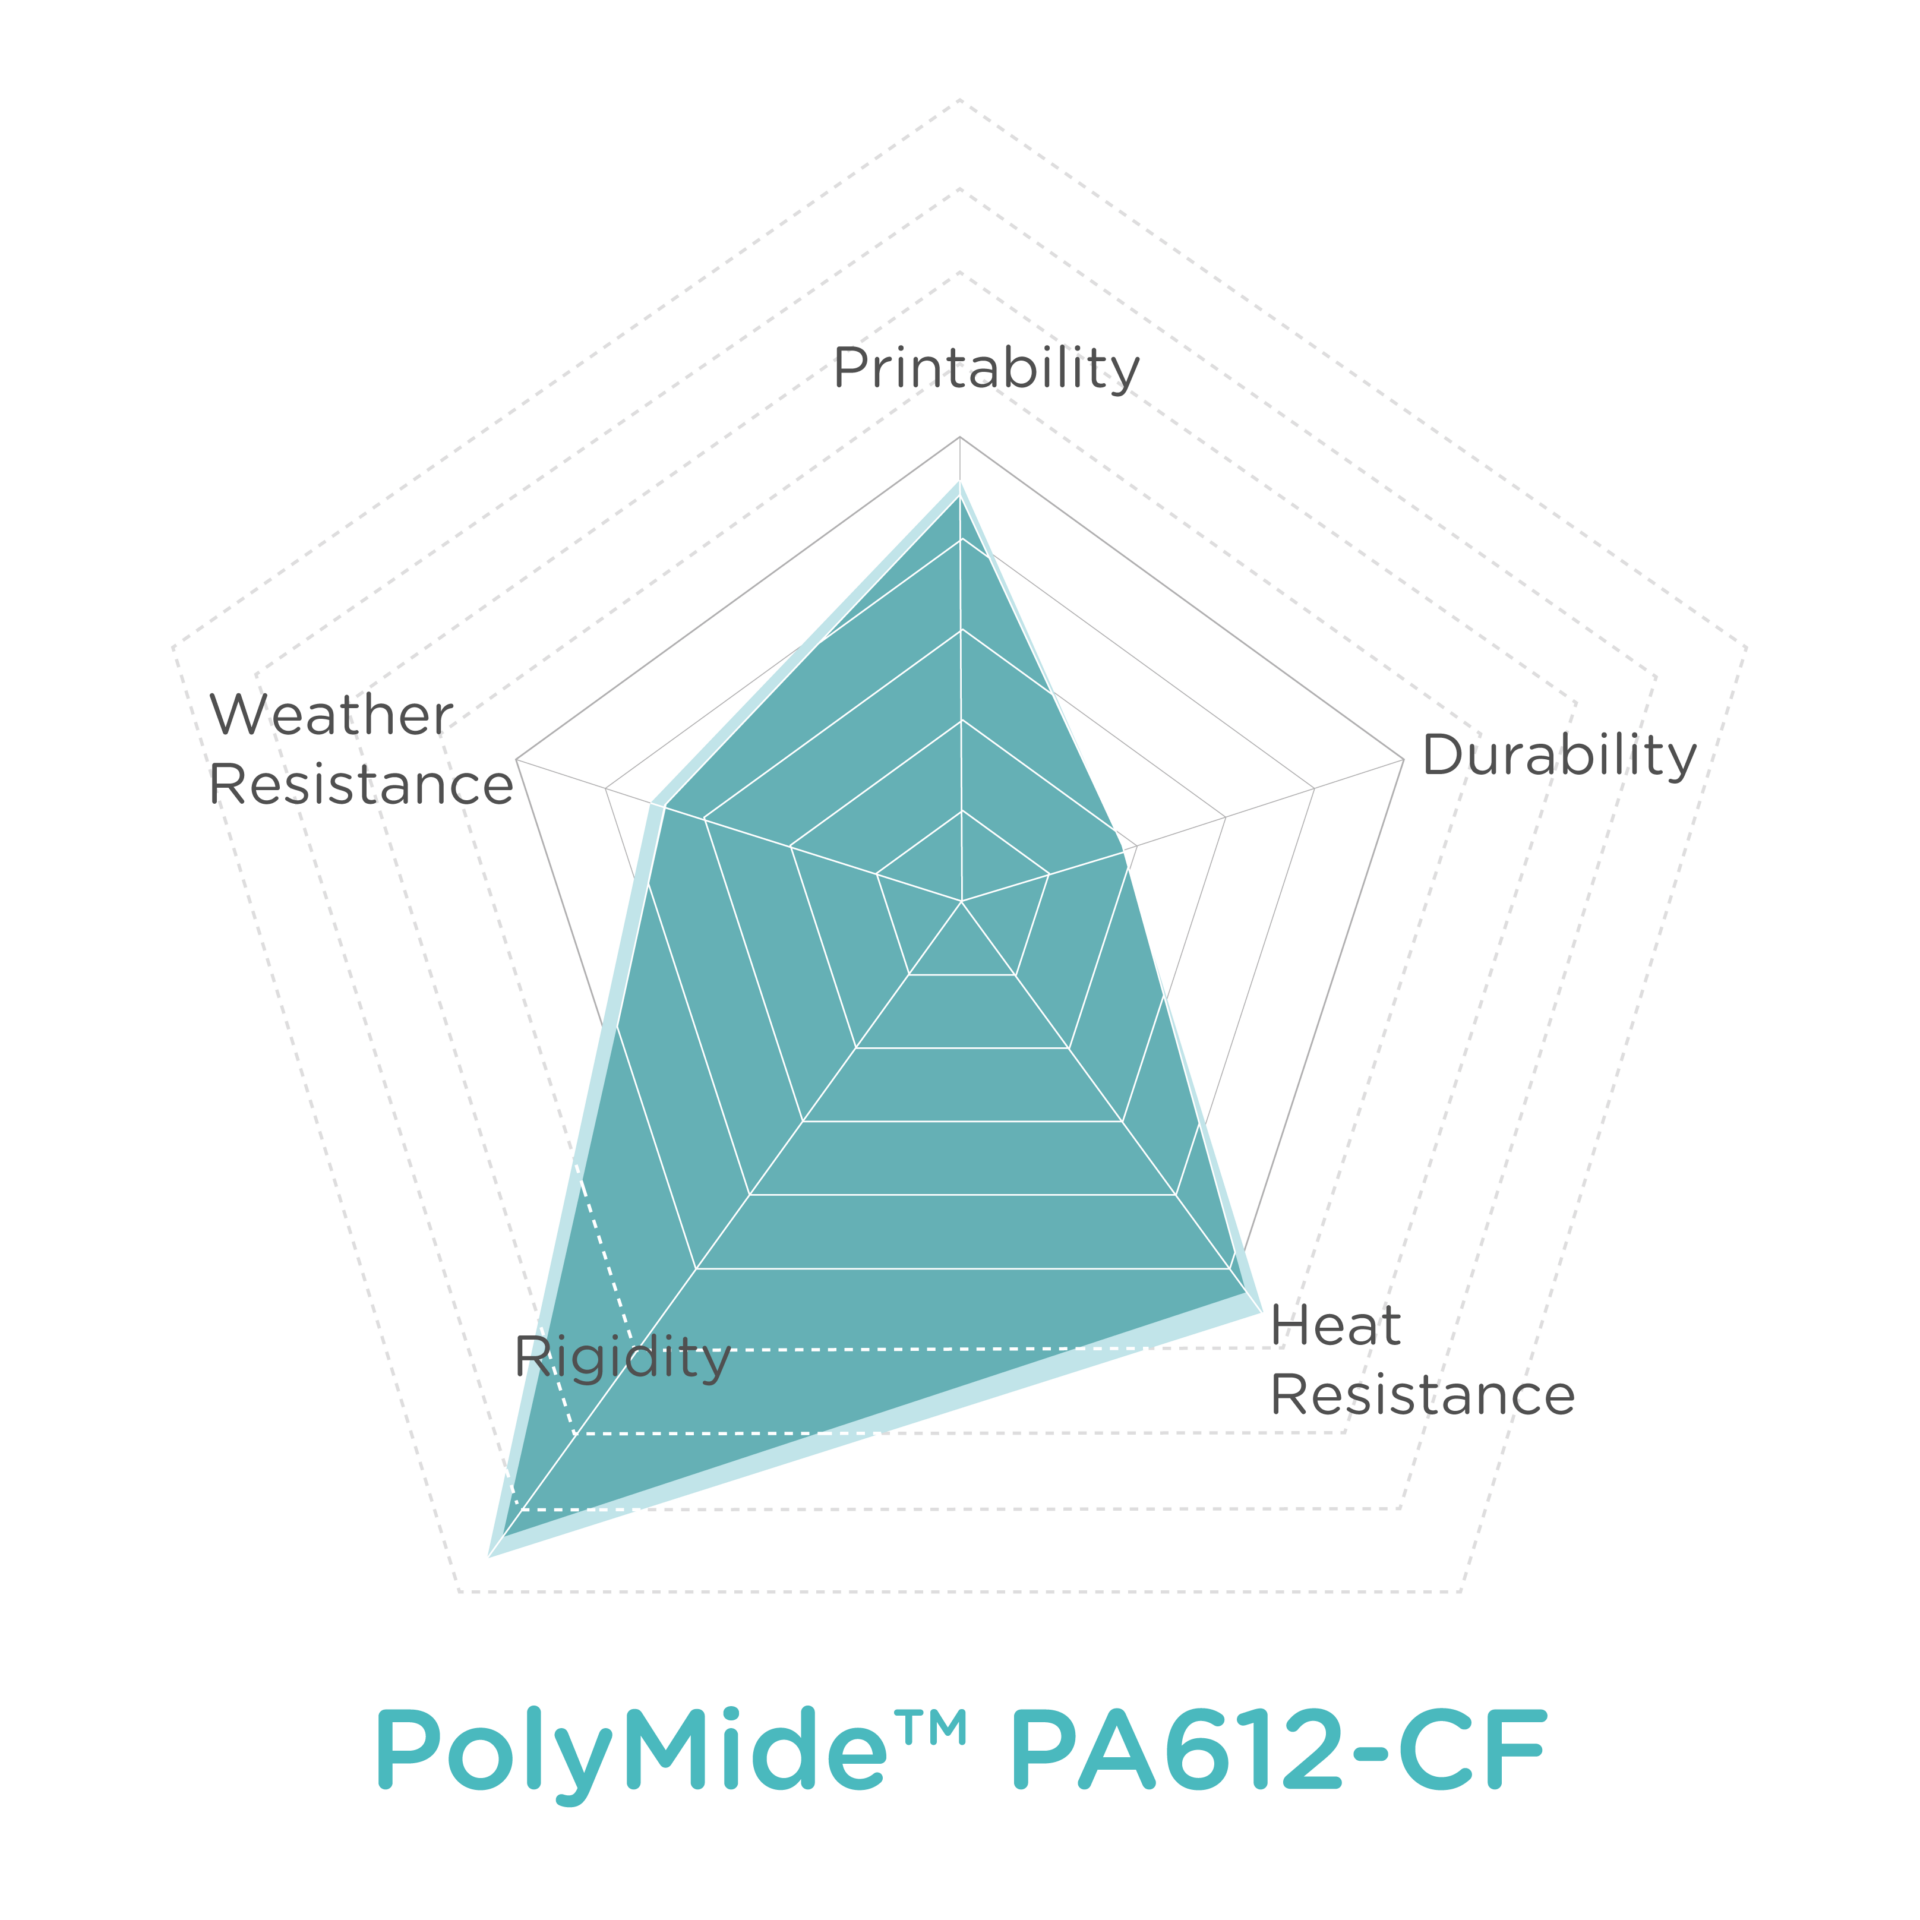 Polymaker - Simplify Creation